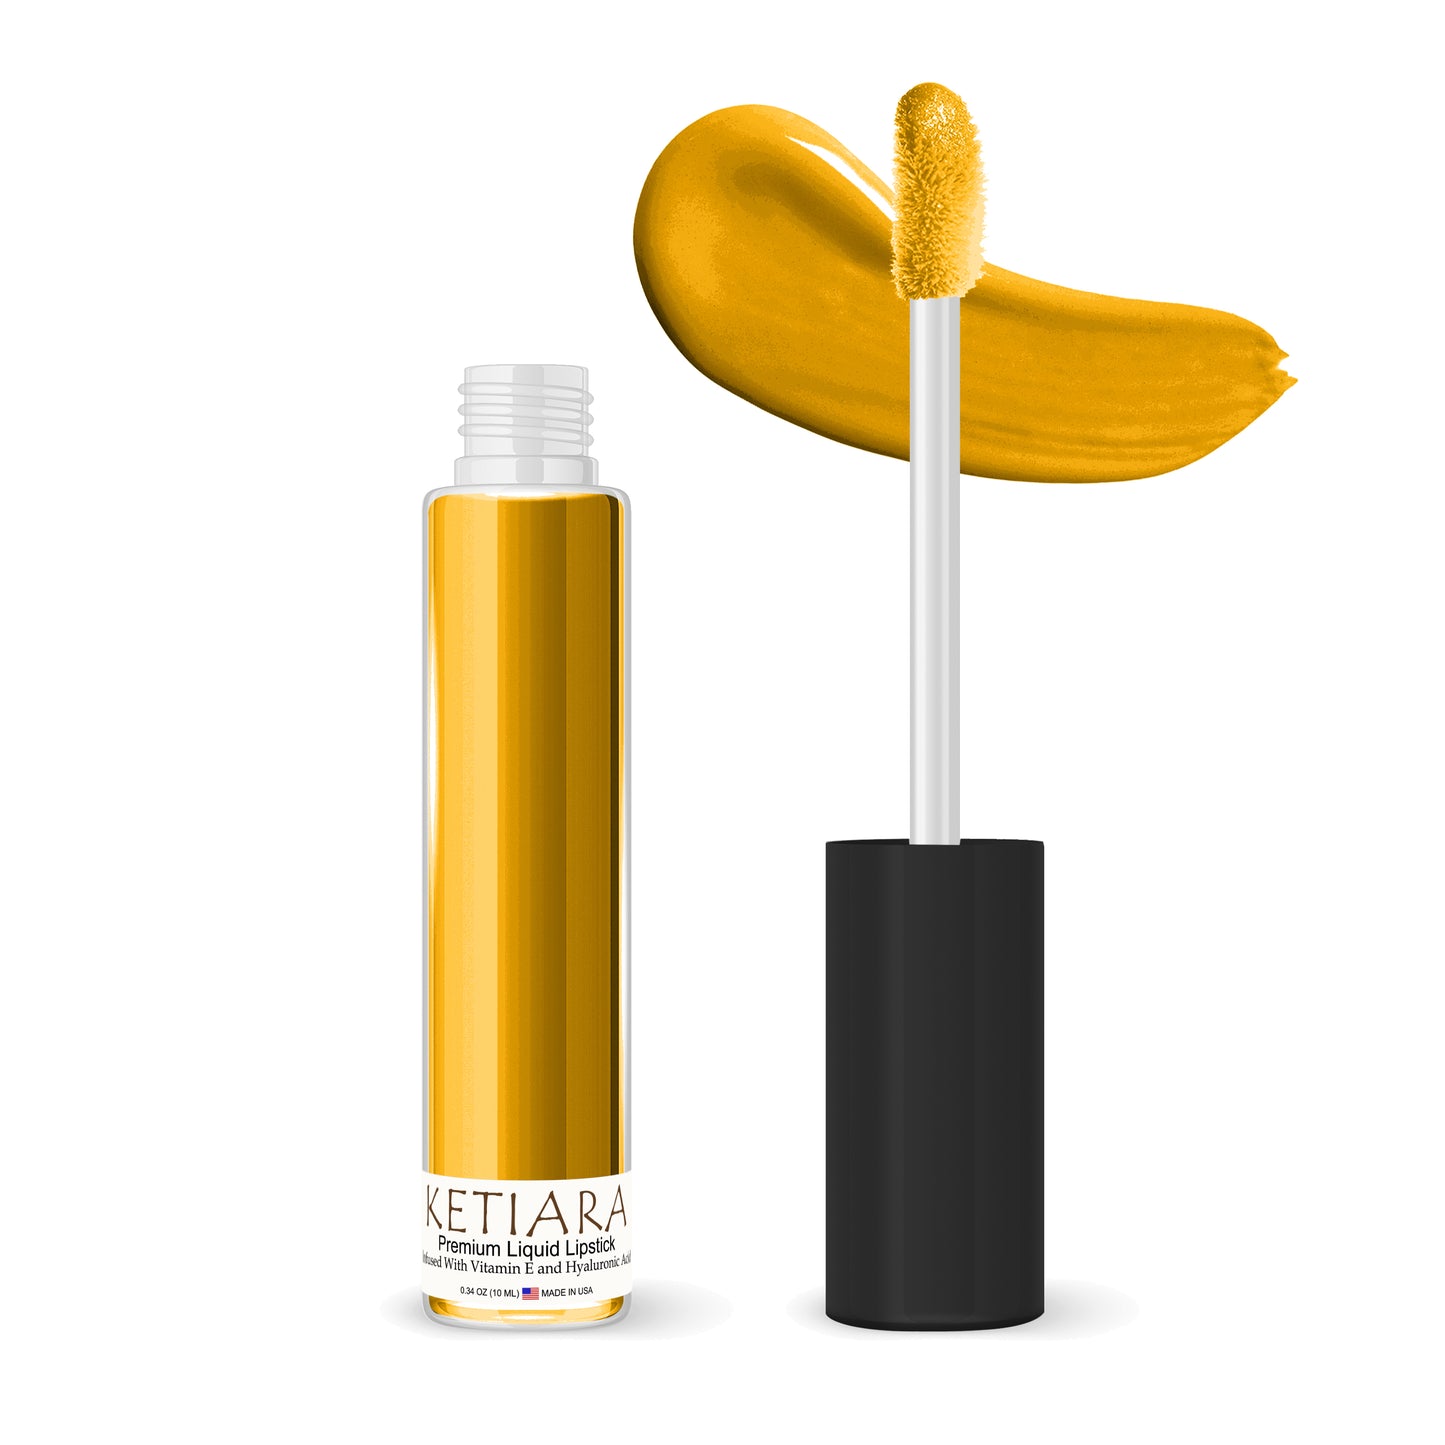 Ketiara Premium Full Coverage Comic Book Liquid Lipstick Infused With Hyaluronic Acid, 10 ml